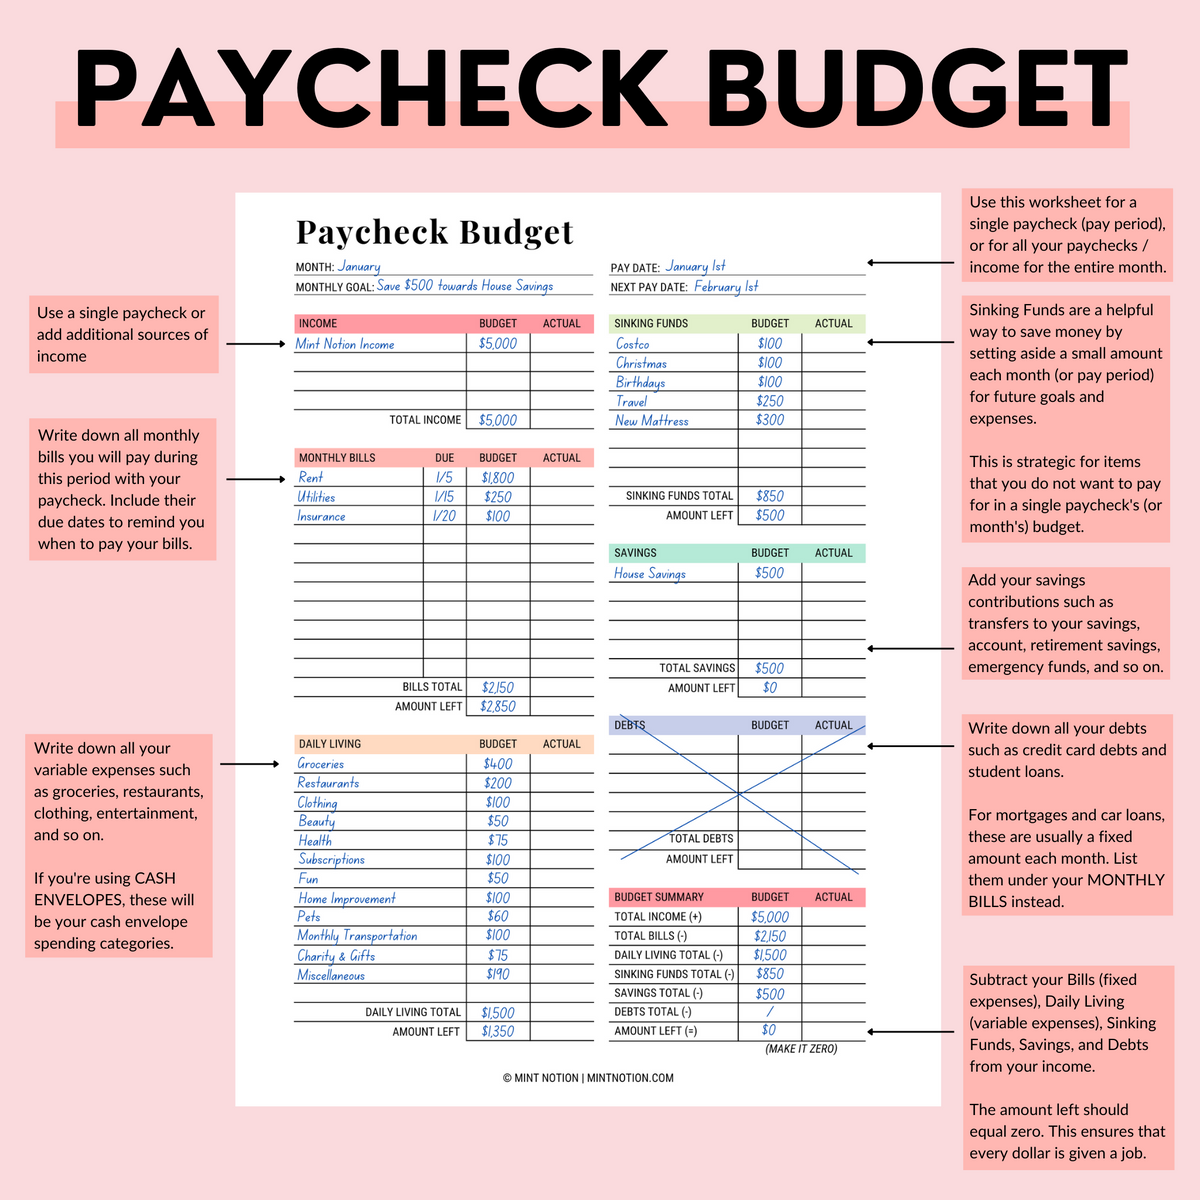 5,000 Dollar Savings Tracker Budget Planner Printable, Savings Printable,  Savings Challenge, Goal Tracker, Habit Tracker, Minimalist, PDF 